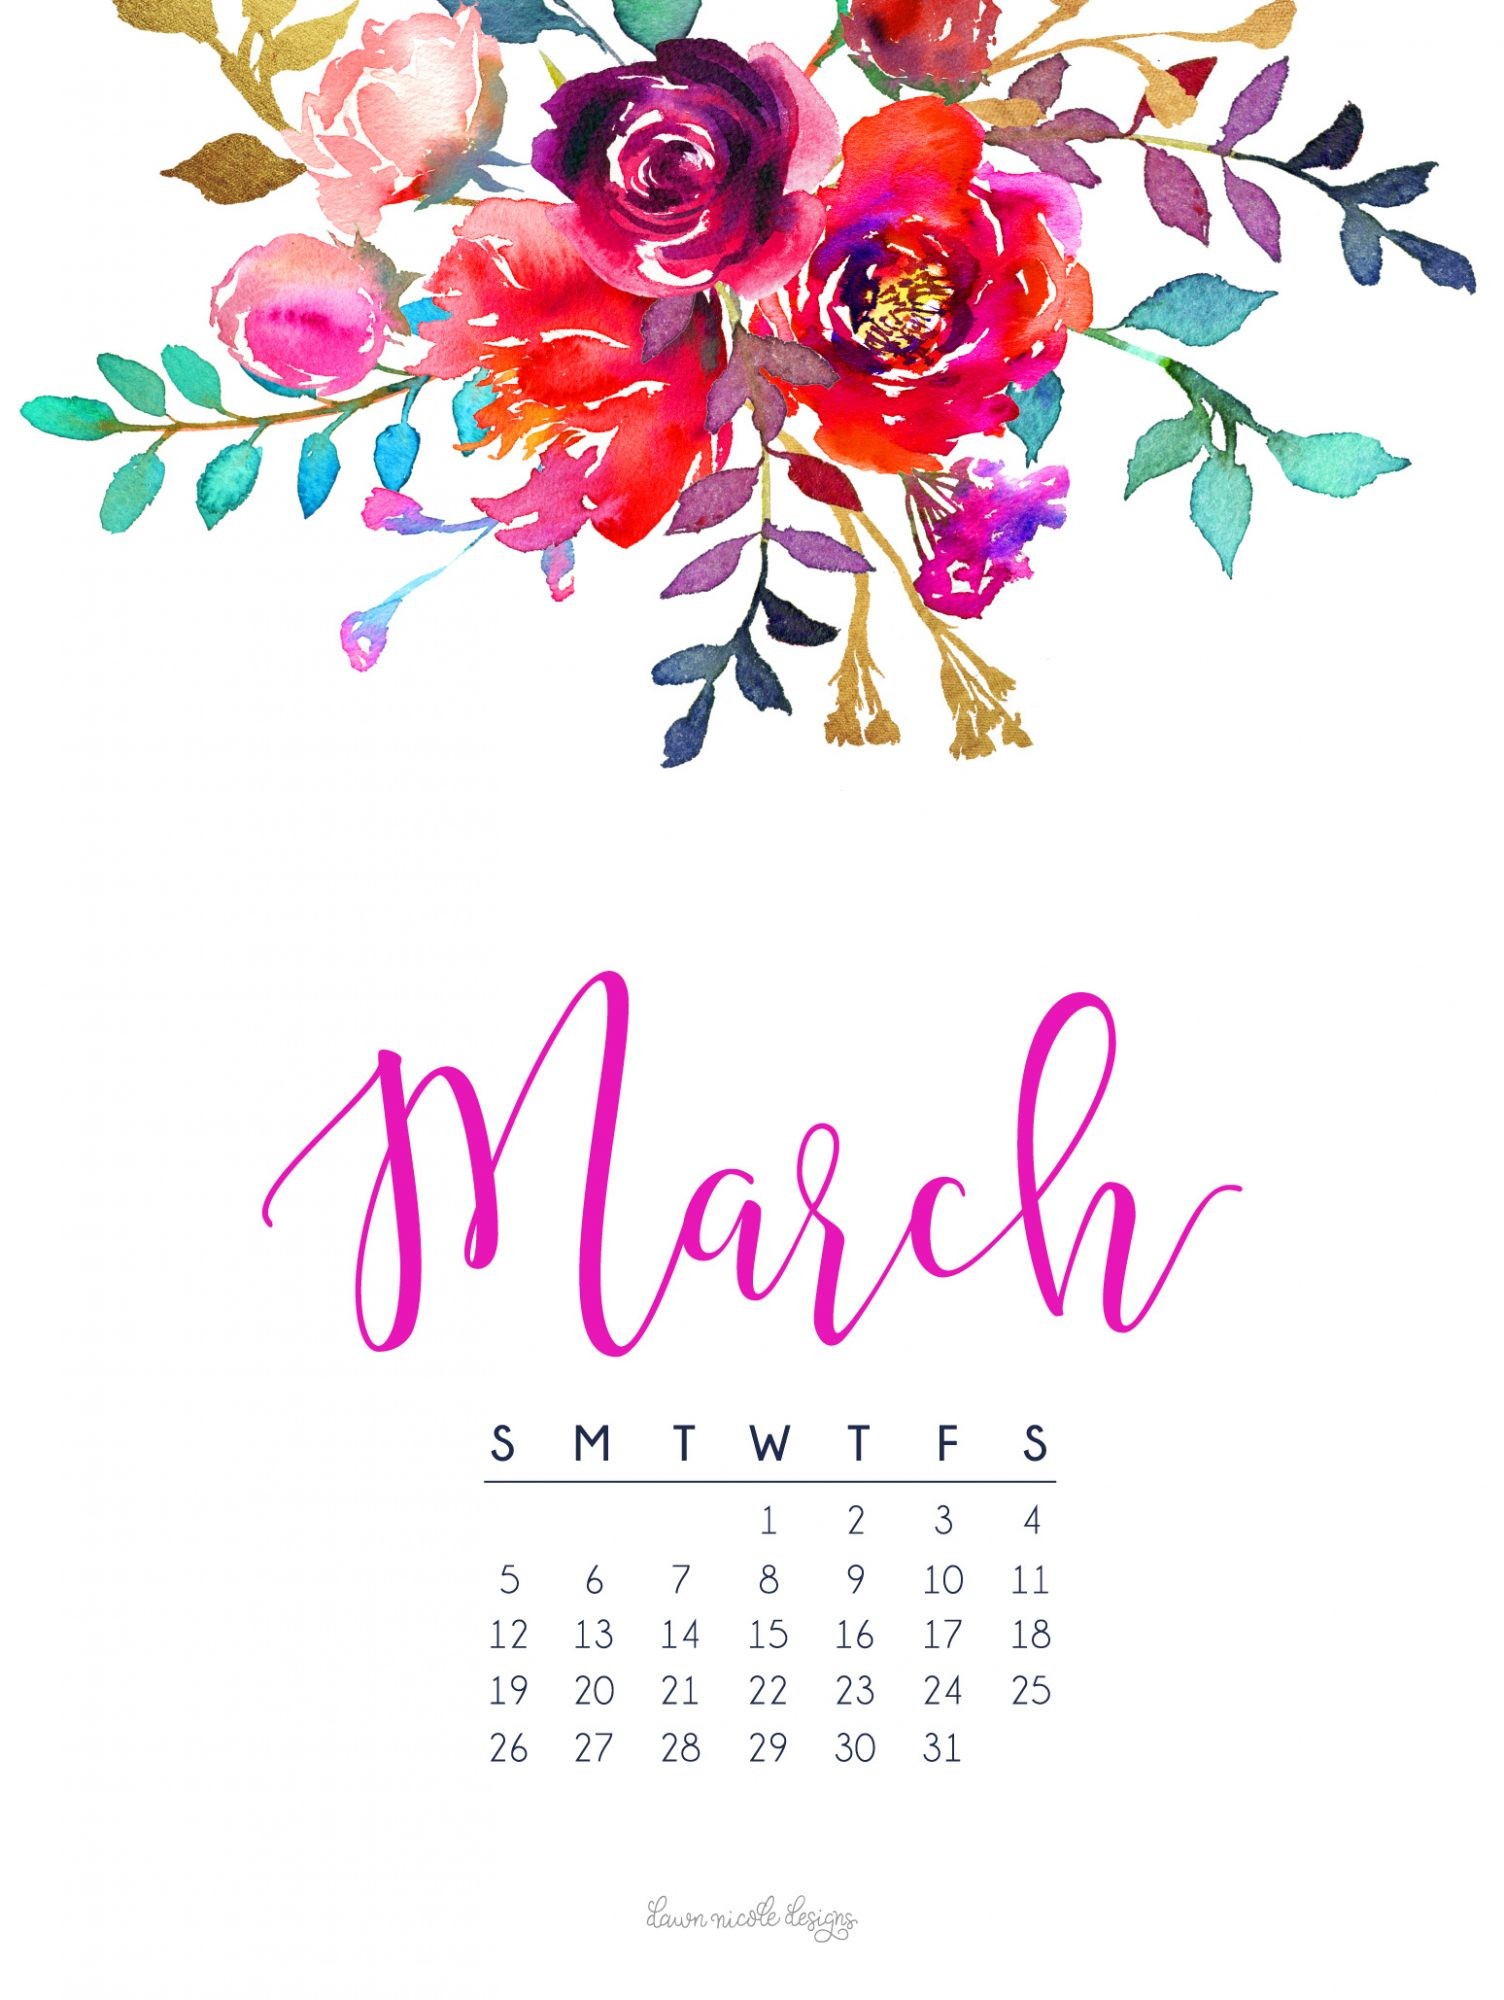 Календарь март 2017. Красивый календарь. Календарь март. Красивый календарь на март. Календарь с красивыми цветами.